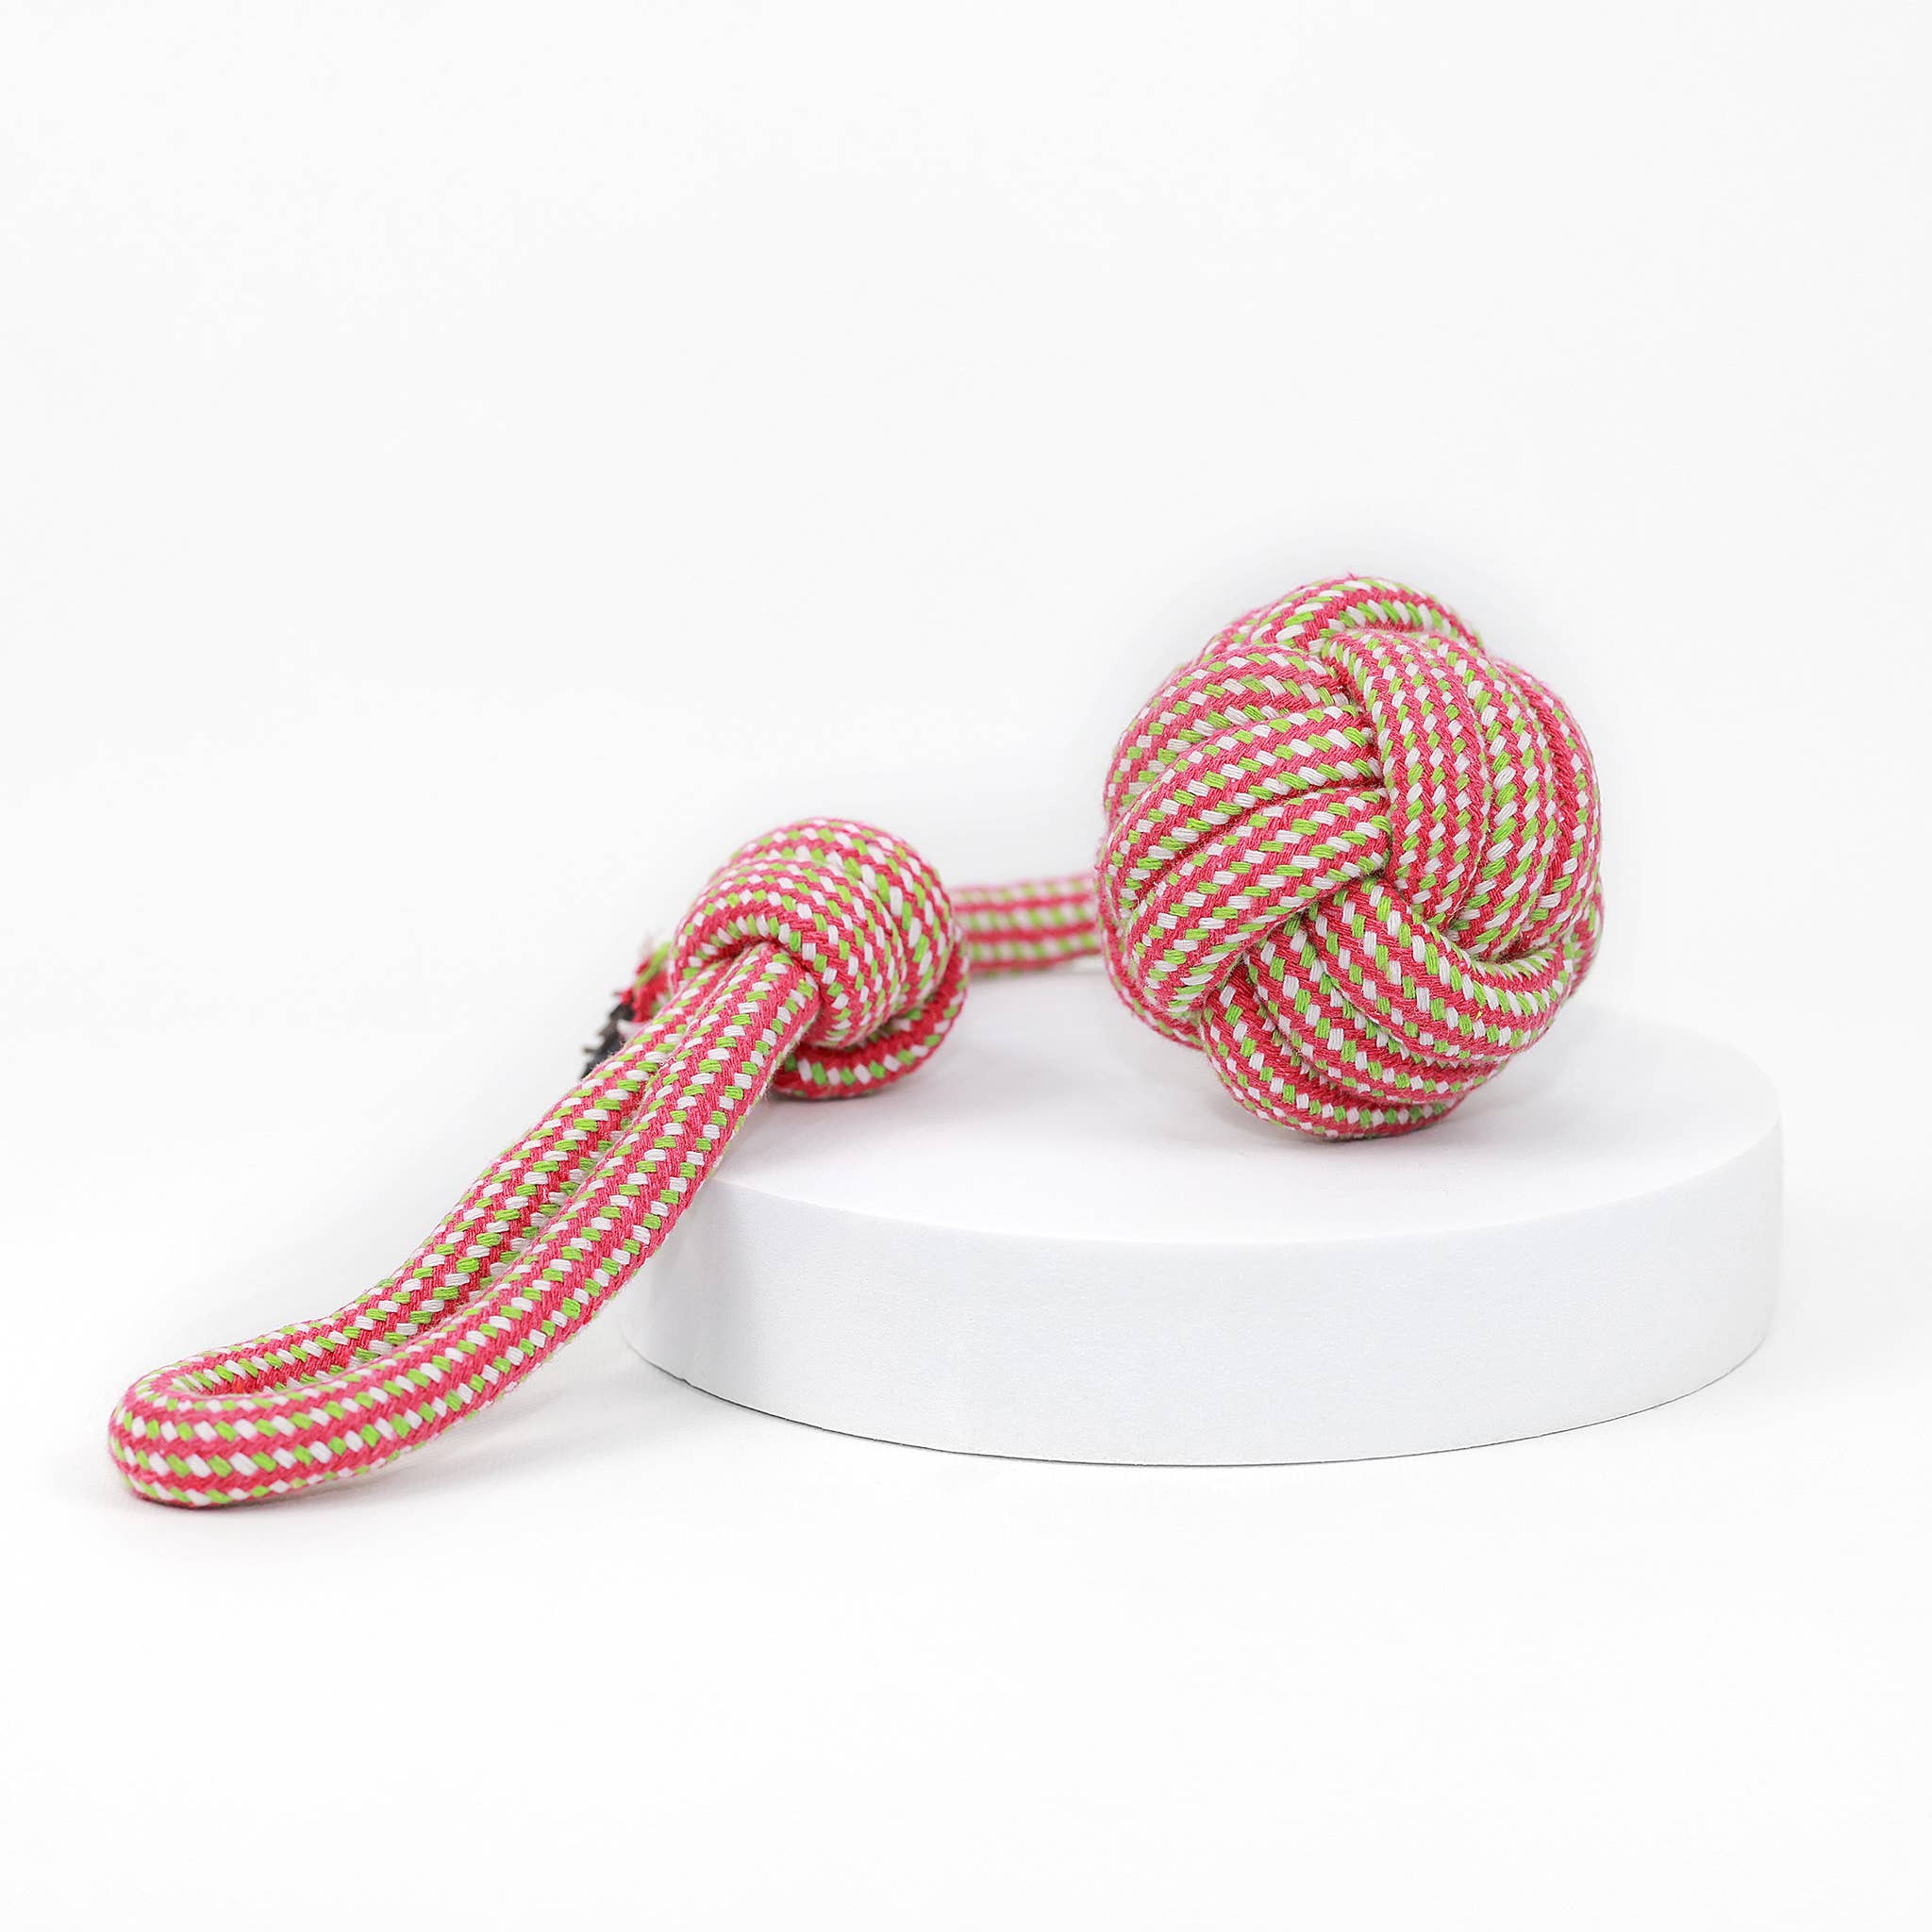 CSCORD International LLC - Pink and Green Tug Rope Ball | Handmade| Sustainable| Loop